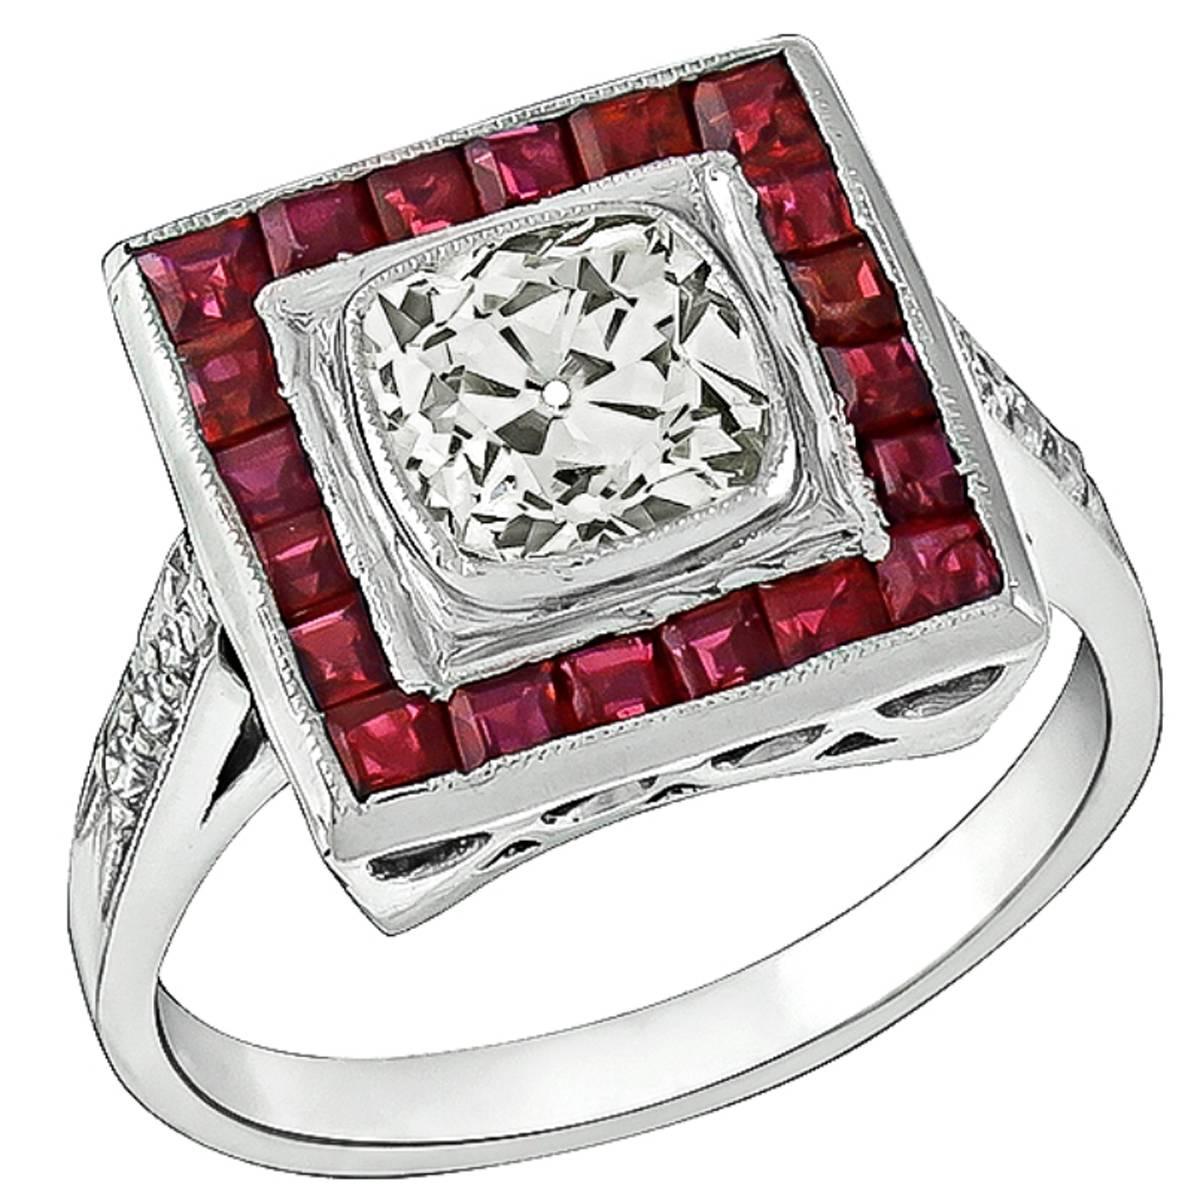 1.15 Carat Old Mine Cushion Cut Diamond Ruby Platinum Engagement Ring